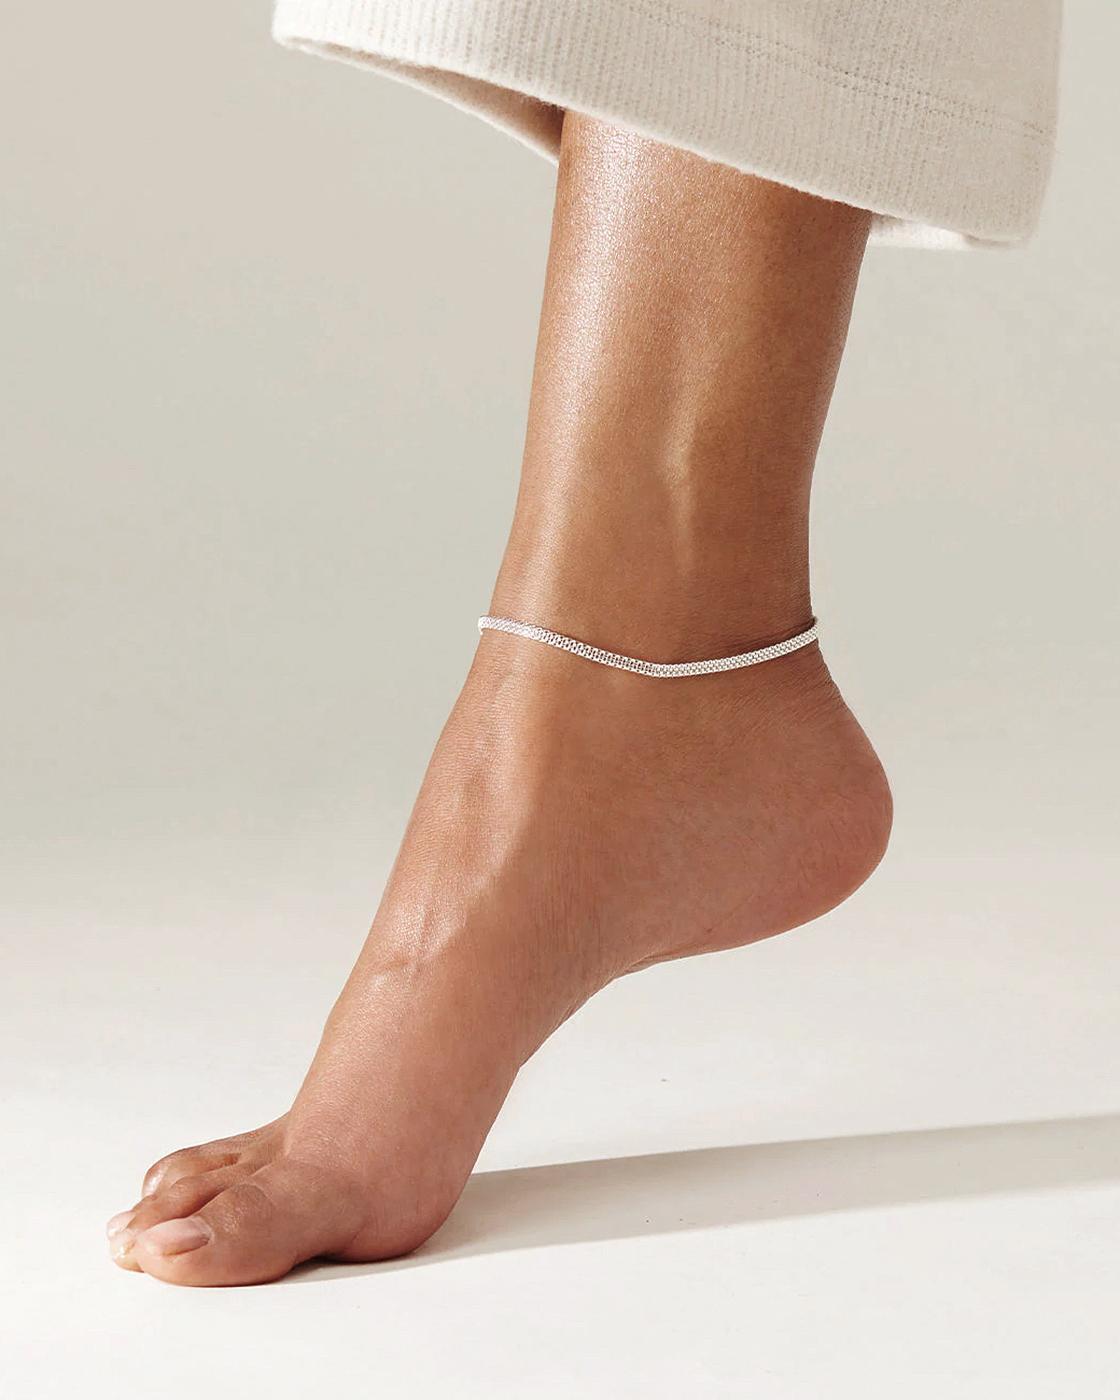 Maren Silver-Plated Anklet